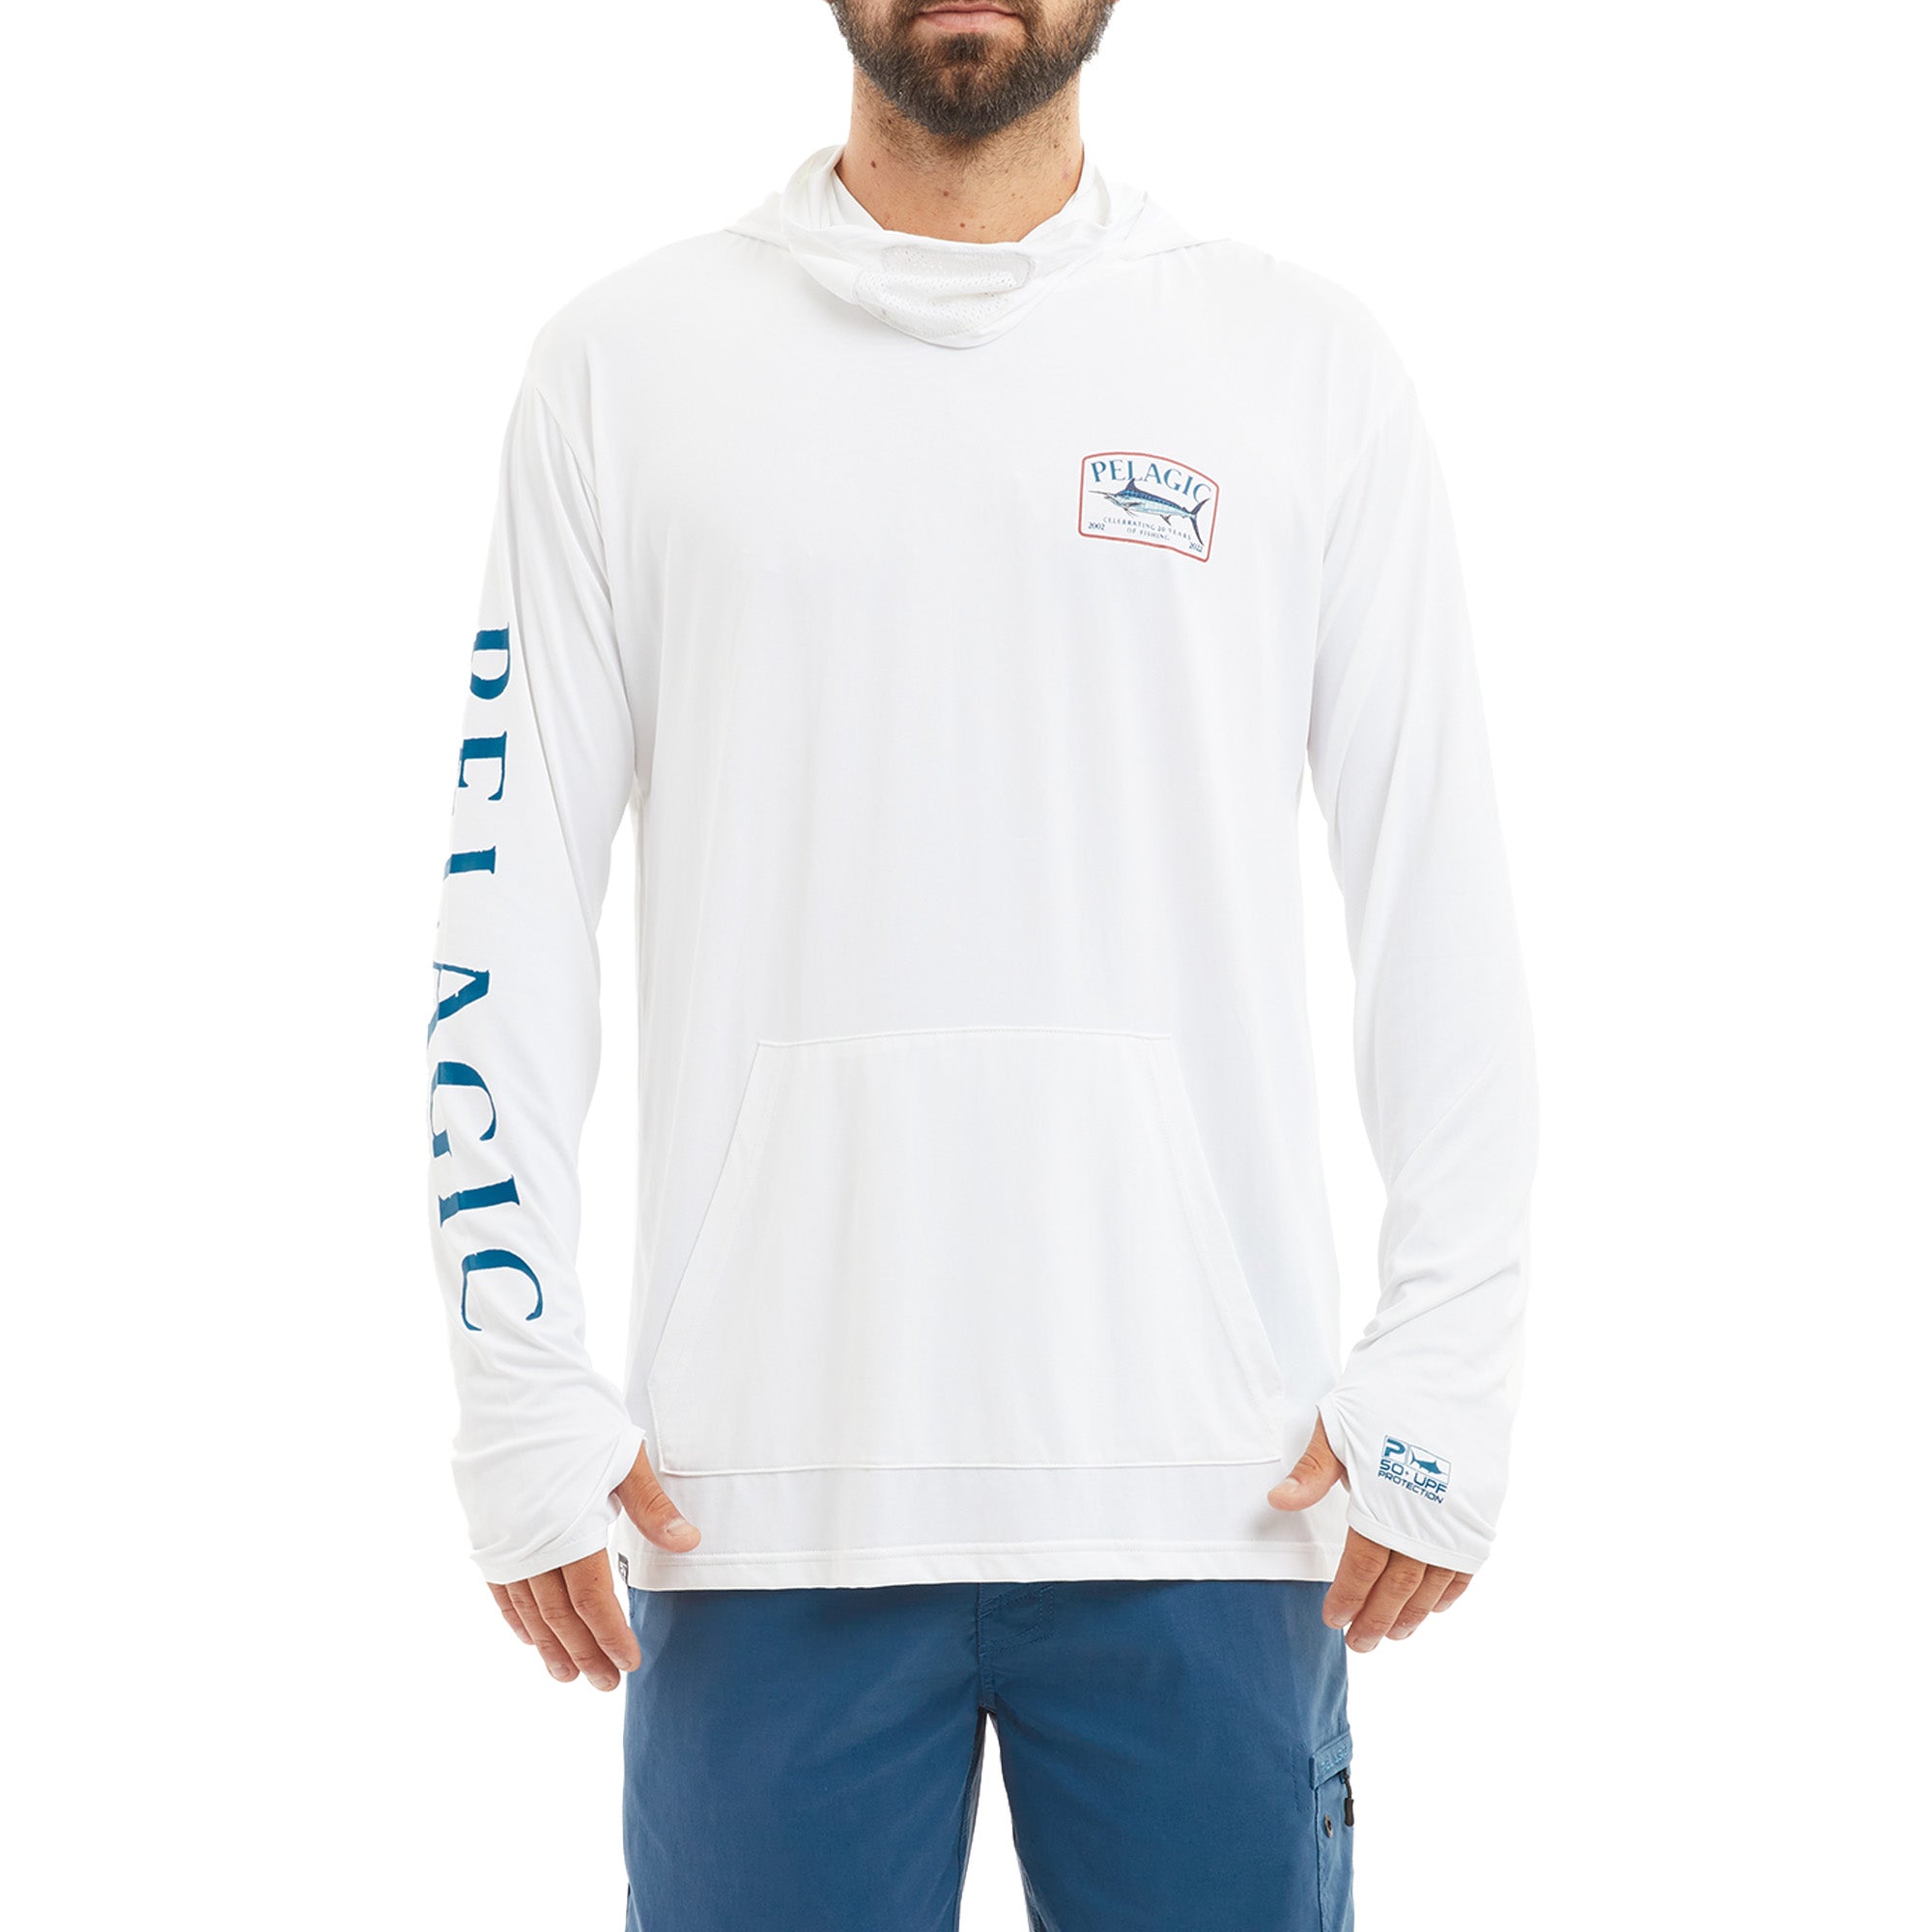 Pelagic Long Sleeve Dri-FIT Shirts White / S